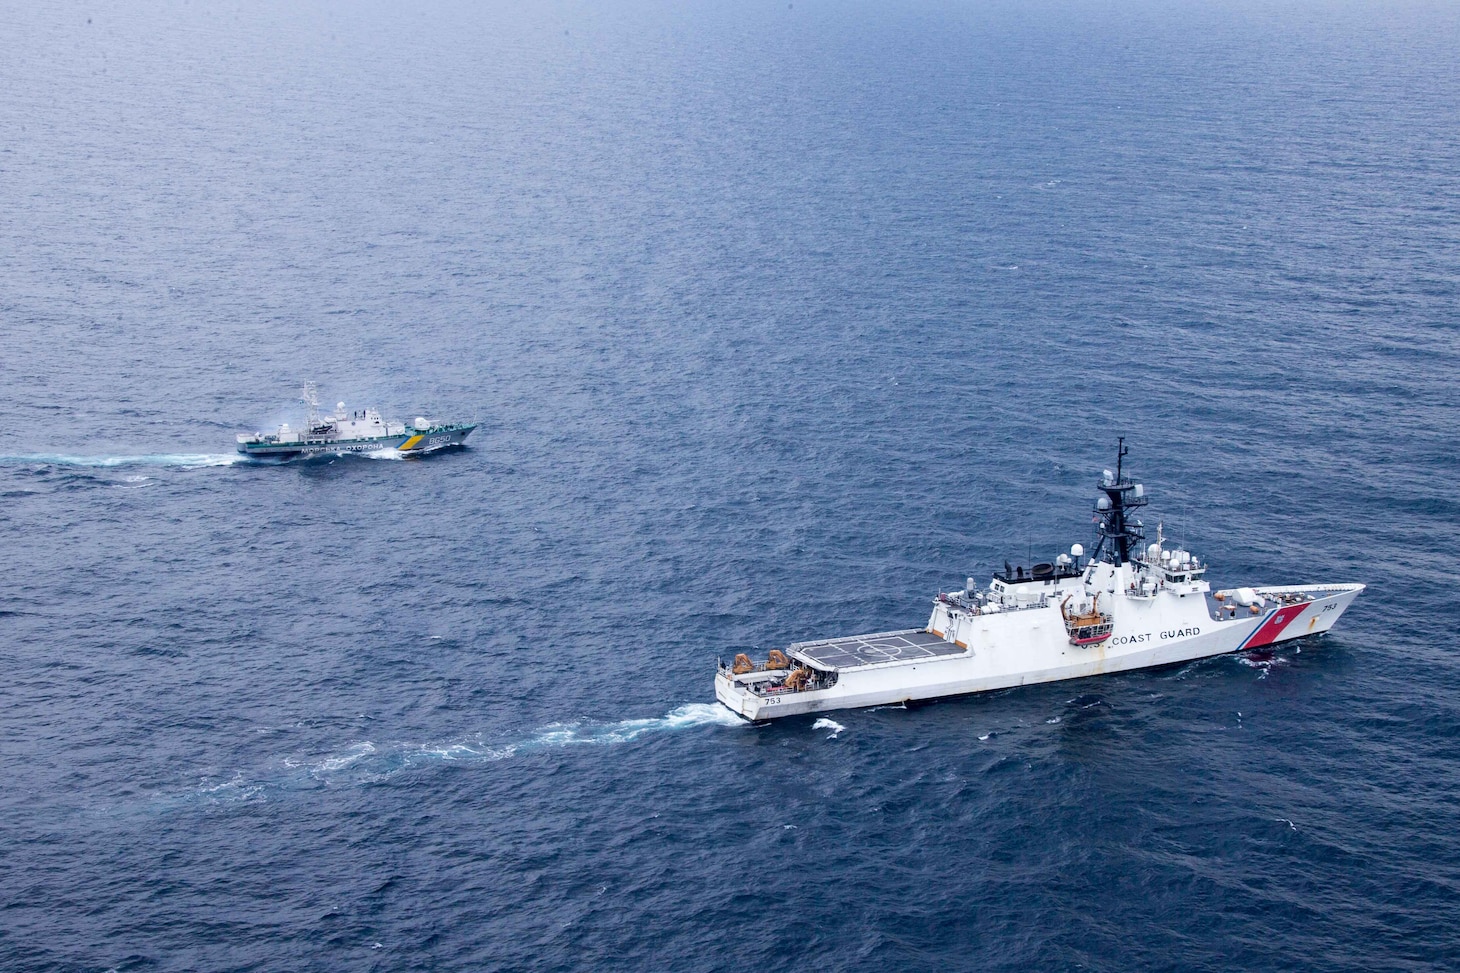 USCGC Hamilton (WMSL 753) and a Ukranian coast guard vessel conduct underway maneuvers in the Black Sea.